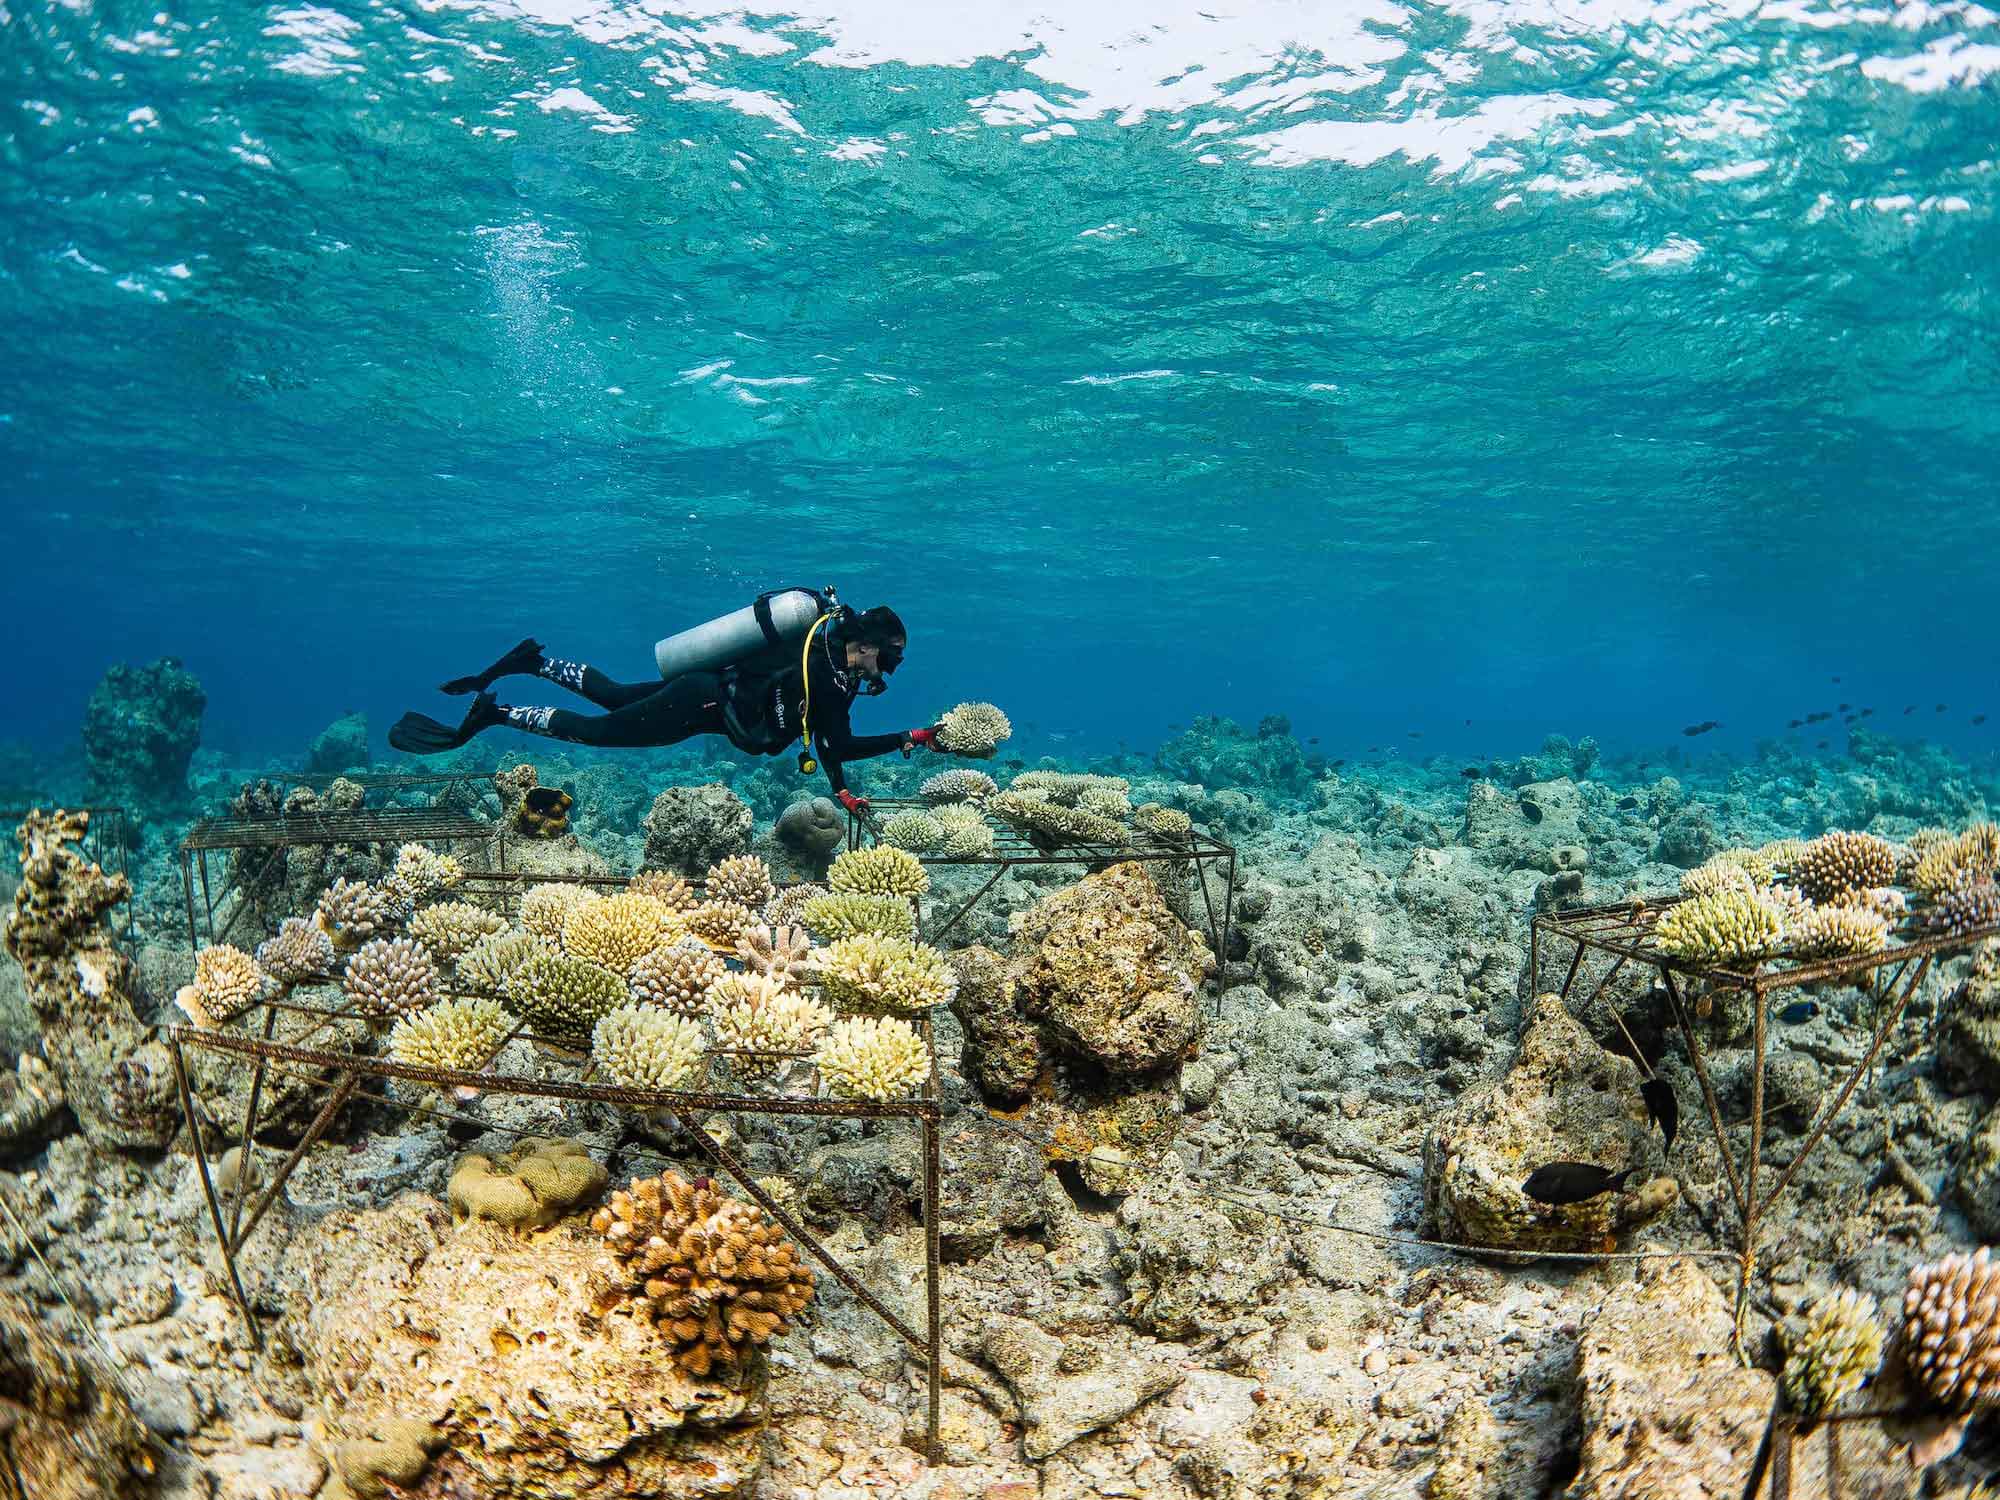 Diver checking condition of sea plants